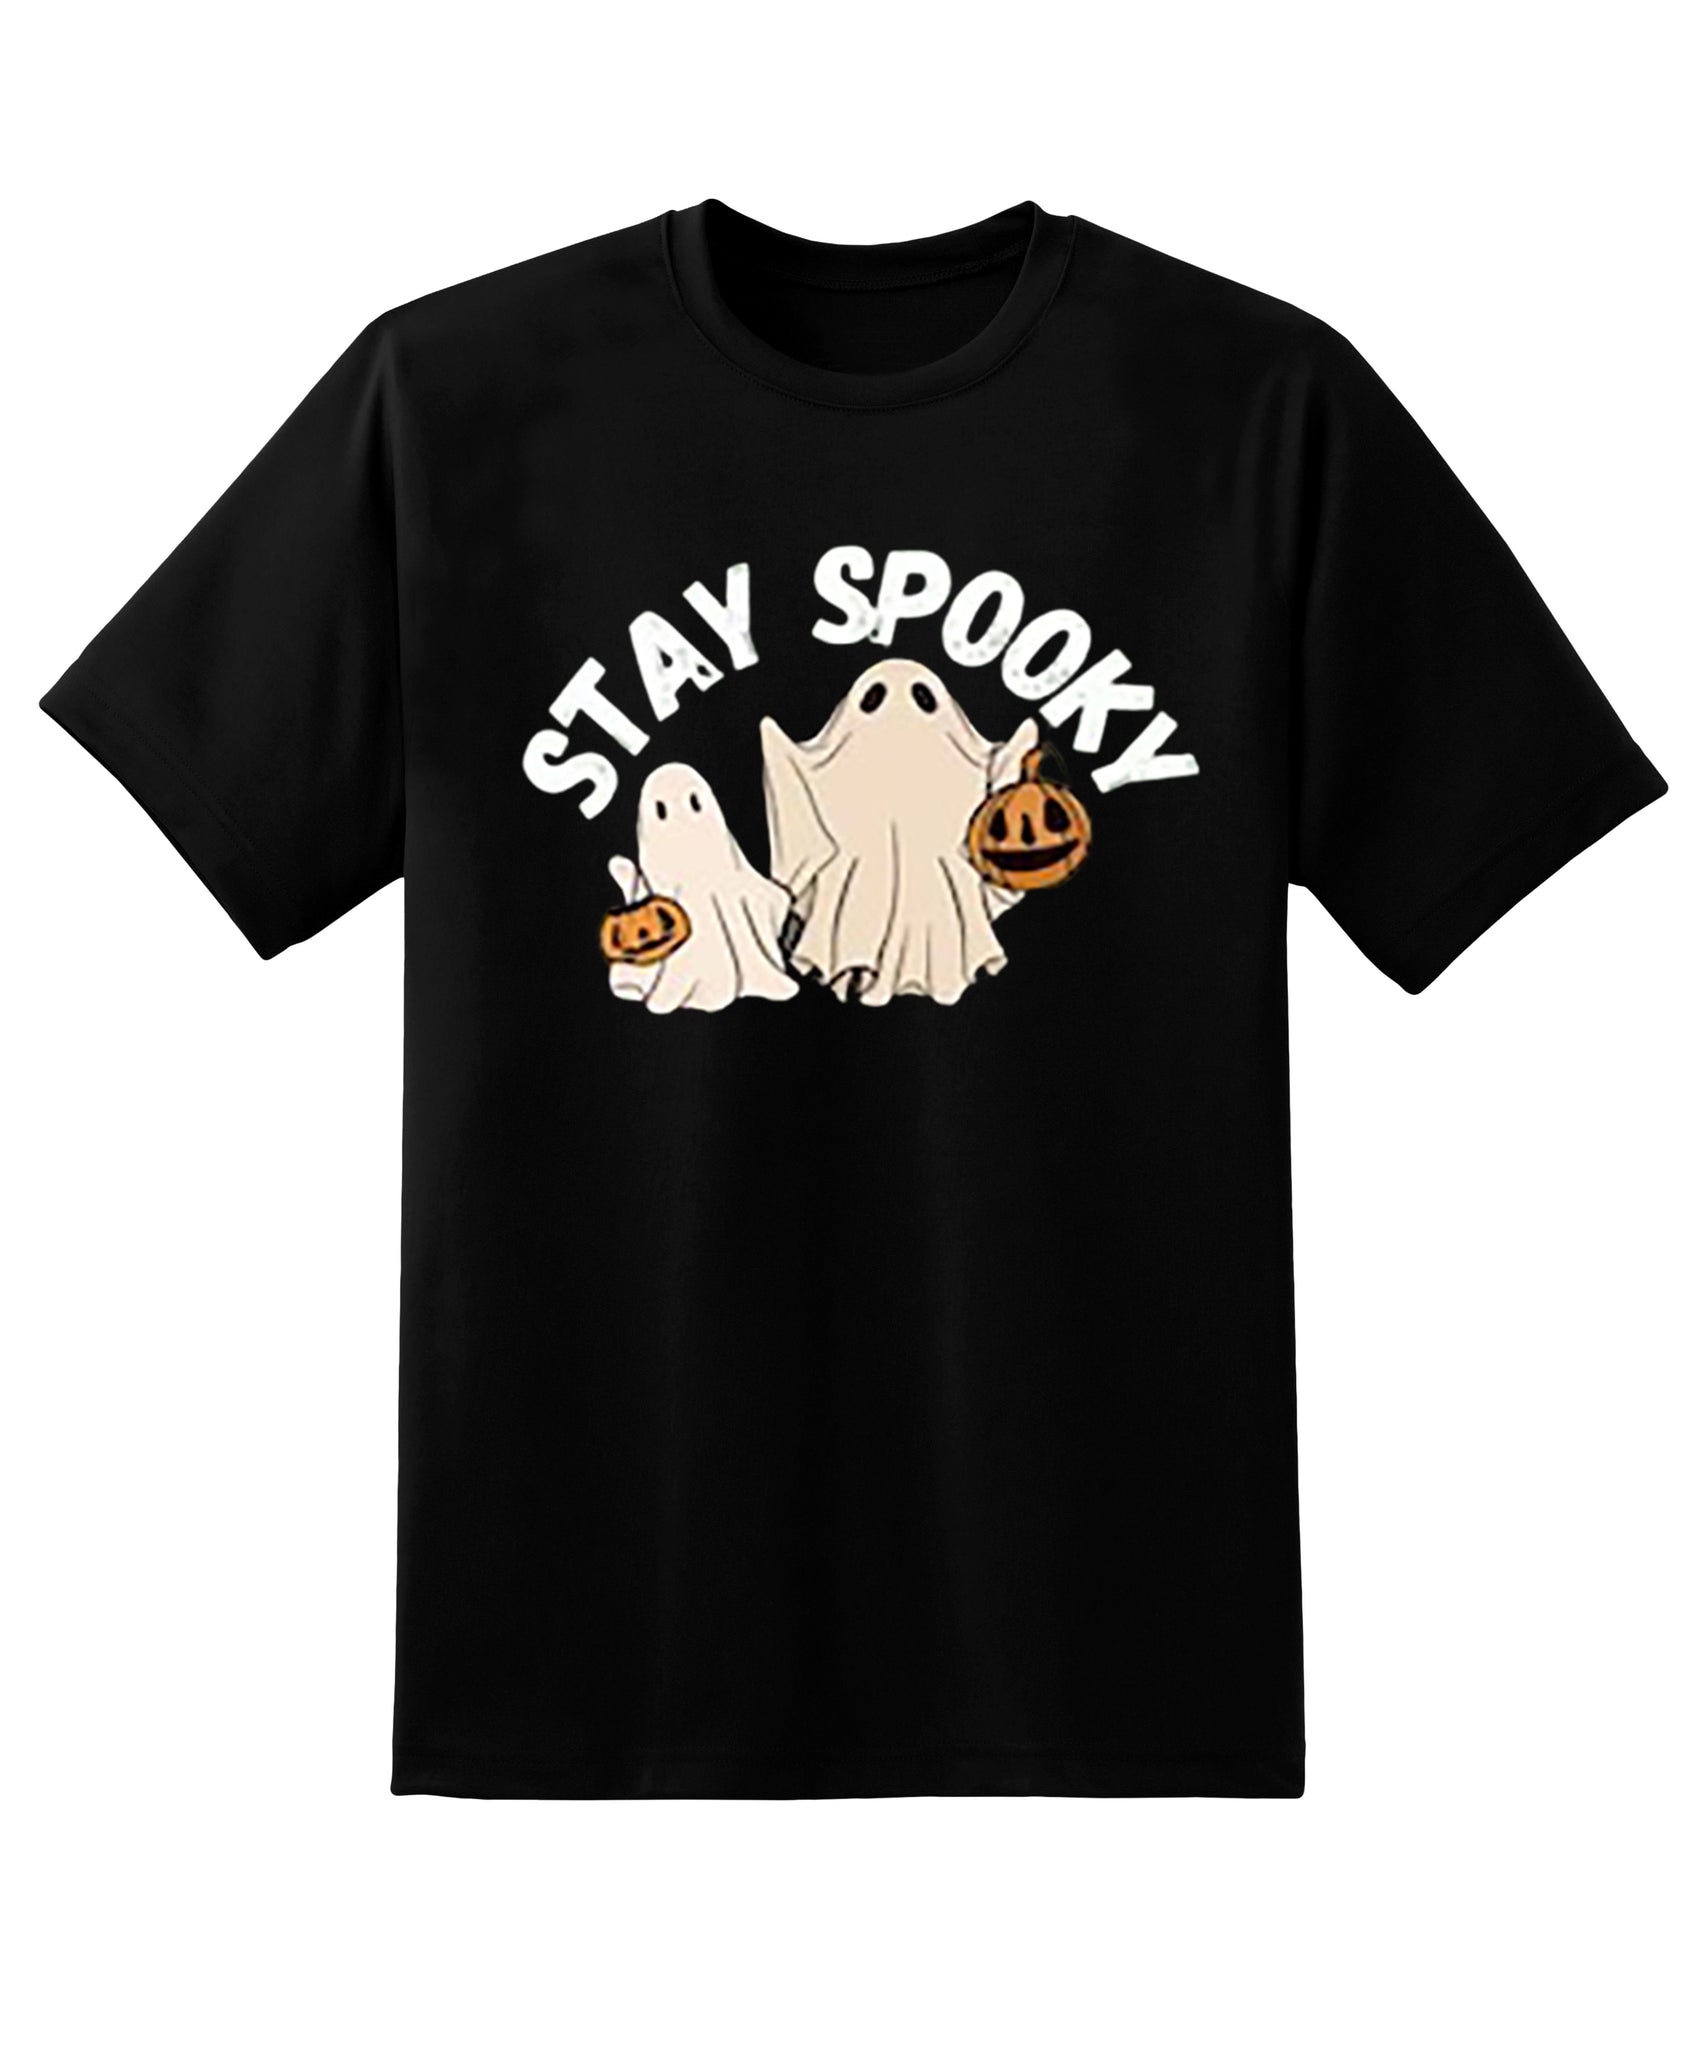 Skitongift Stay Spooky T-Shirt,Retro Stay Spooky Pocket Tee,Cute Halloween Shirt,Halloween Shirt For Women,Spooky Season Shirt